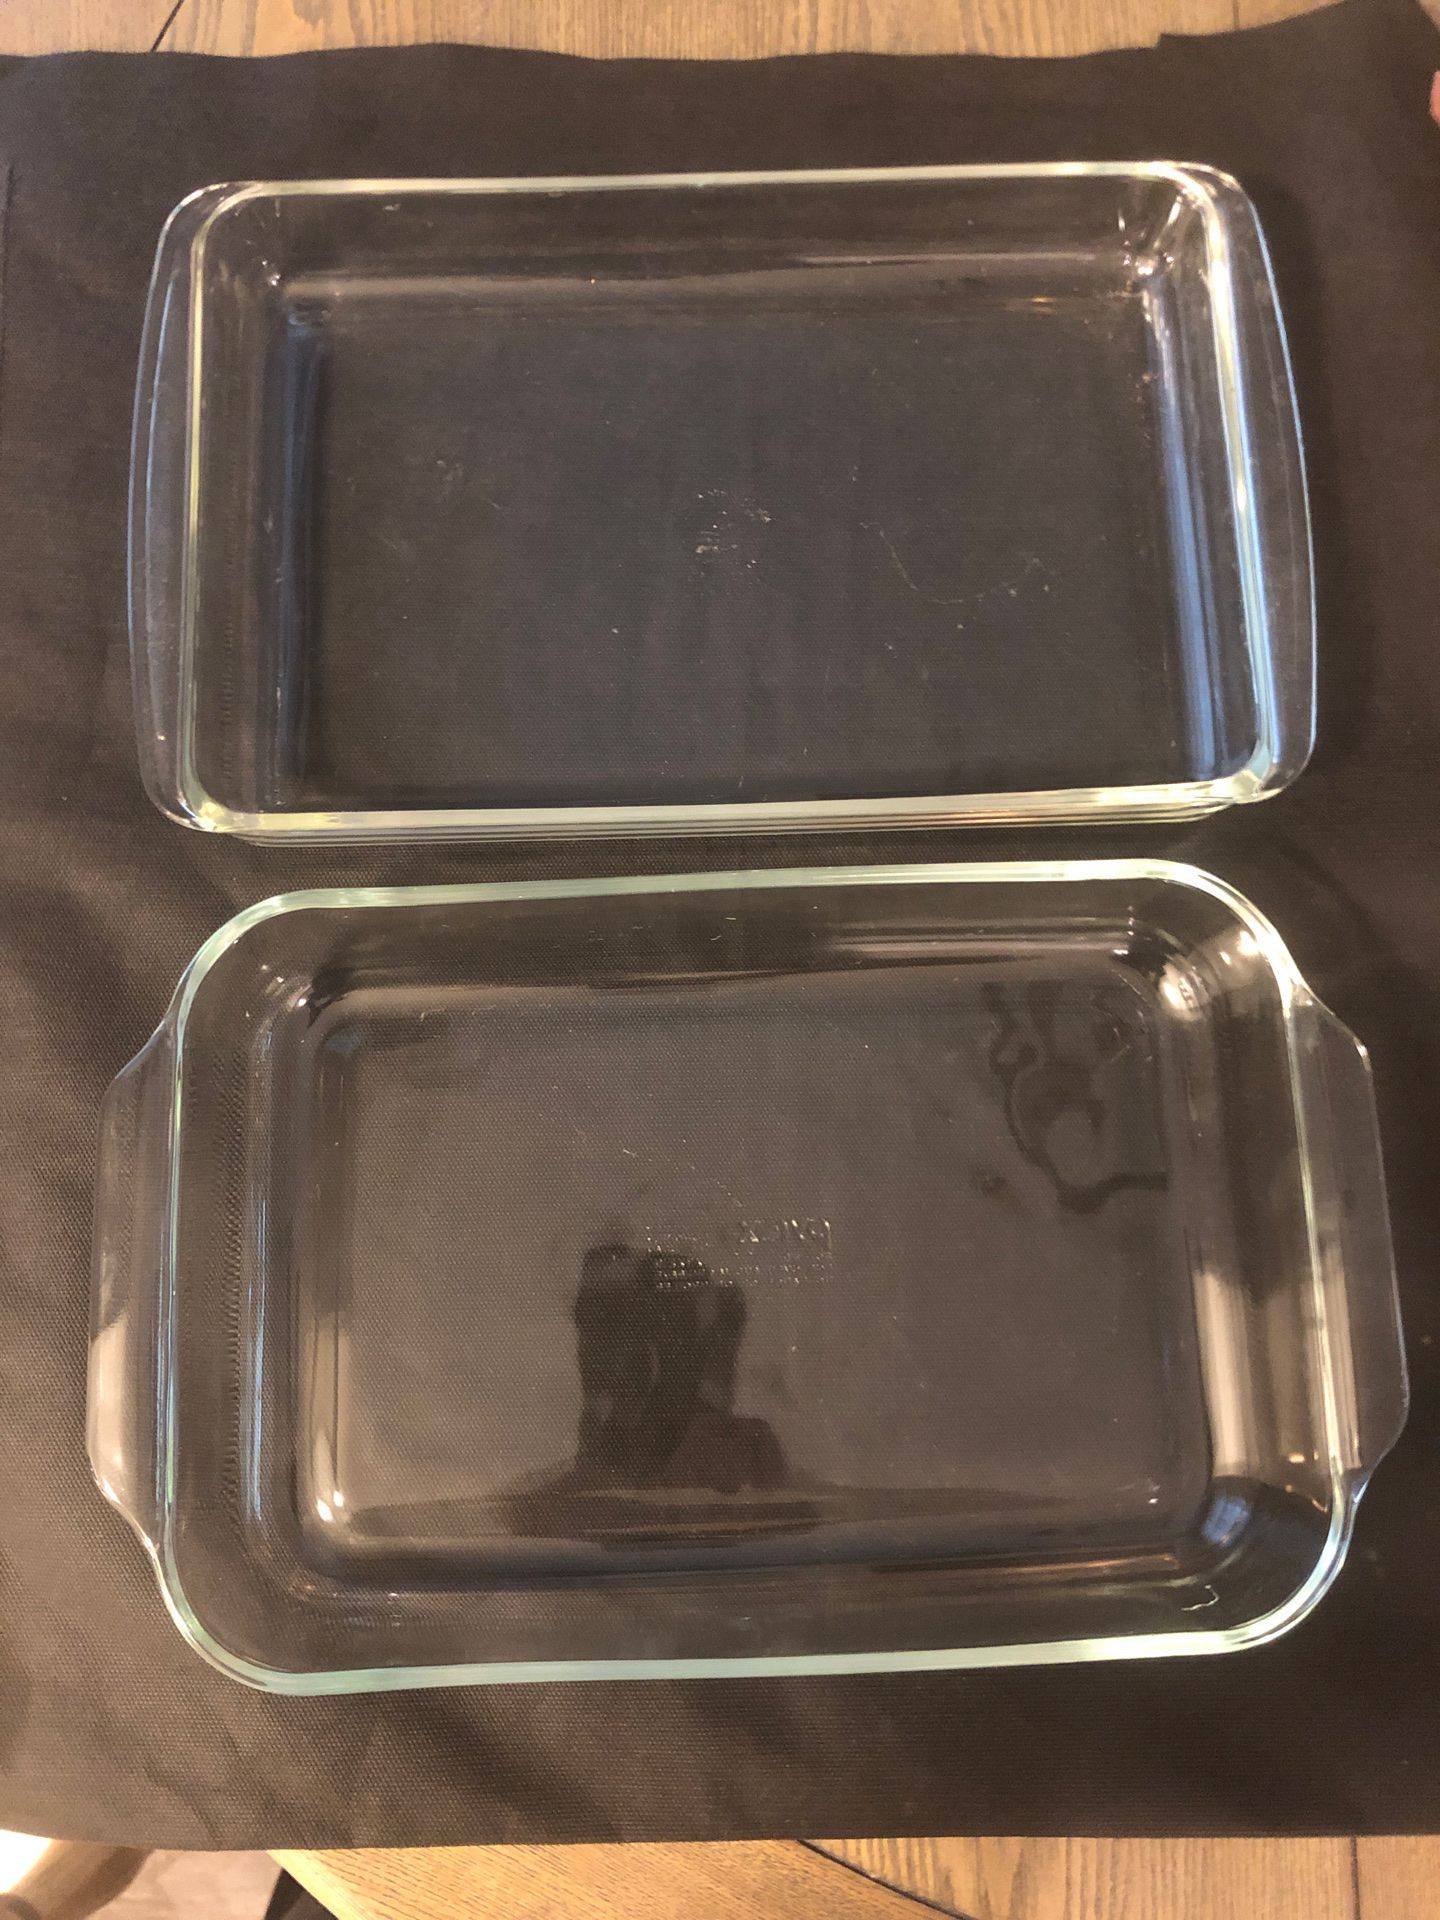 Pyrex glassware approximately 9” x 13”